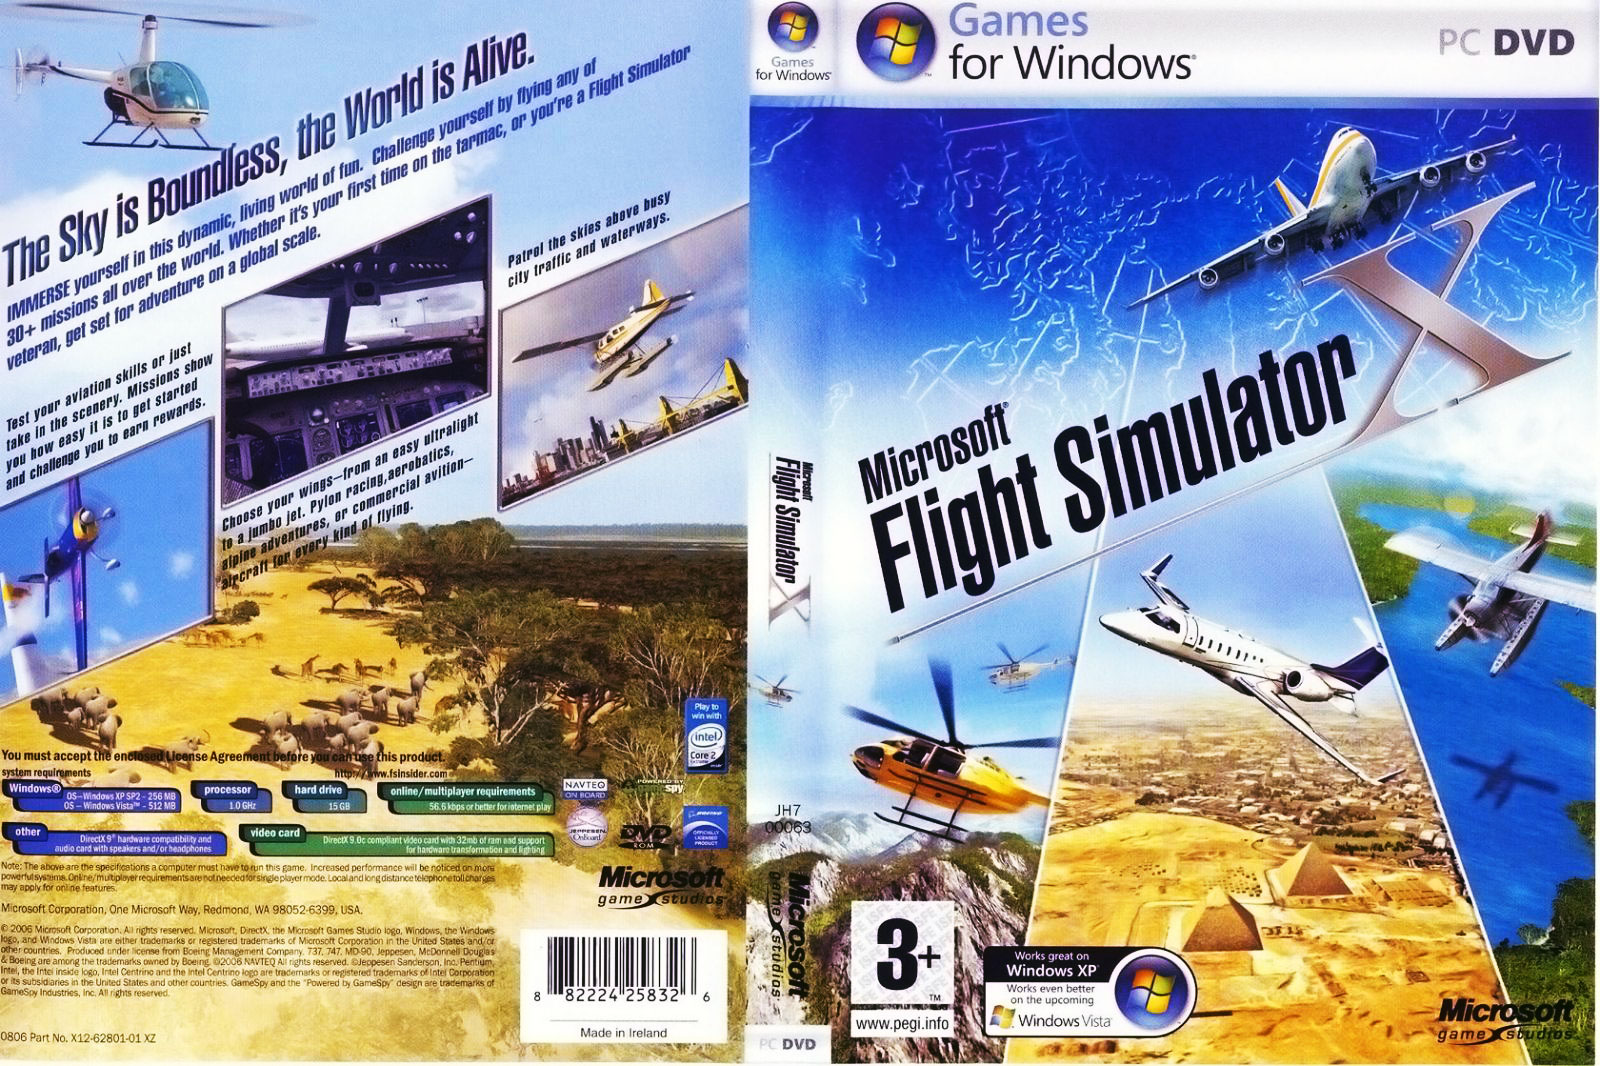 microsoft flight simulator x download for free